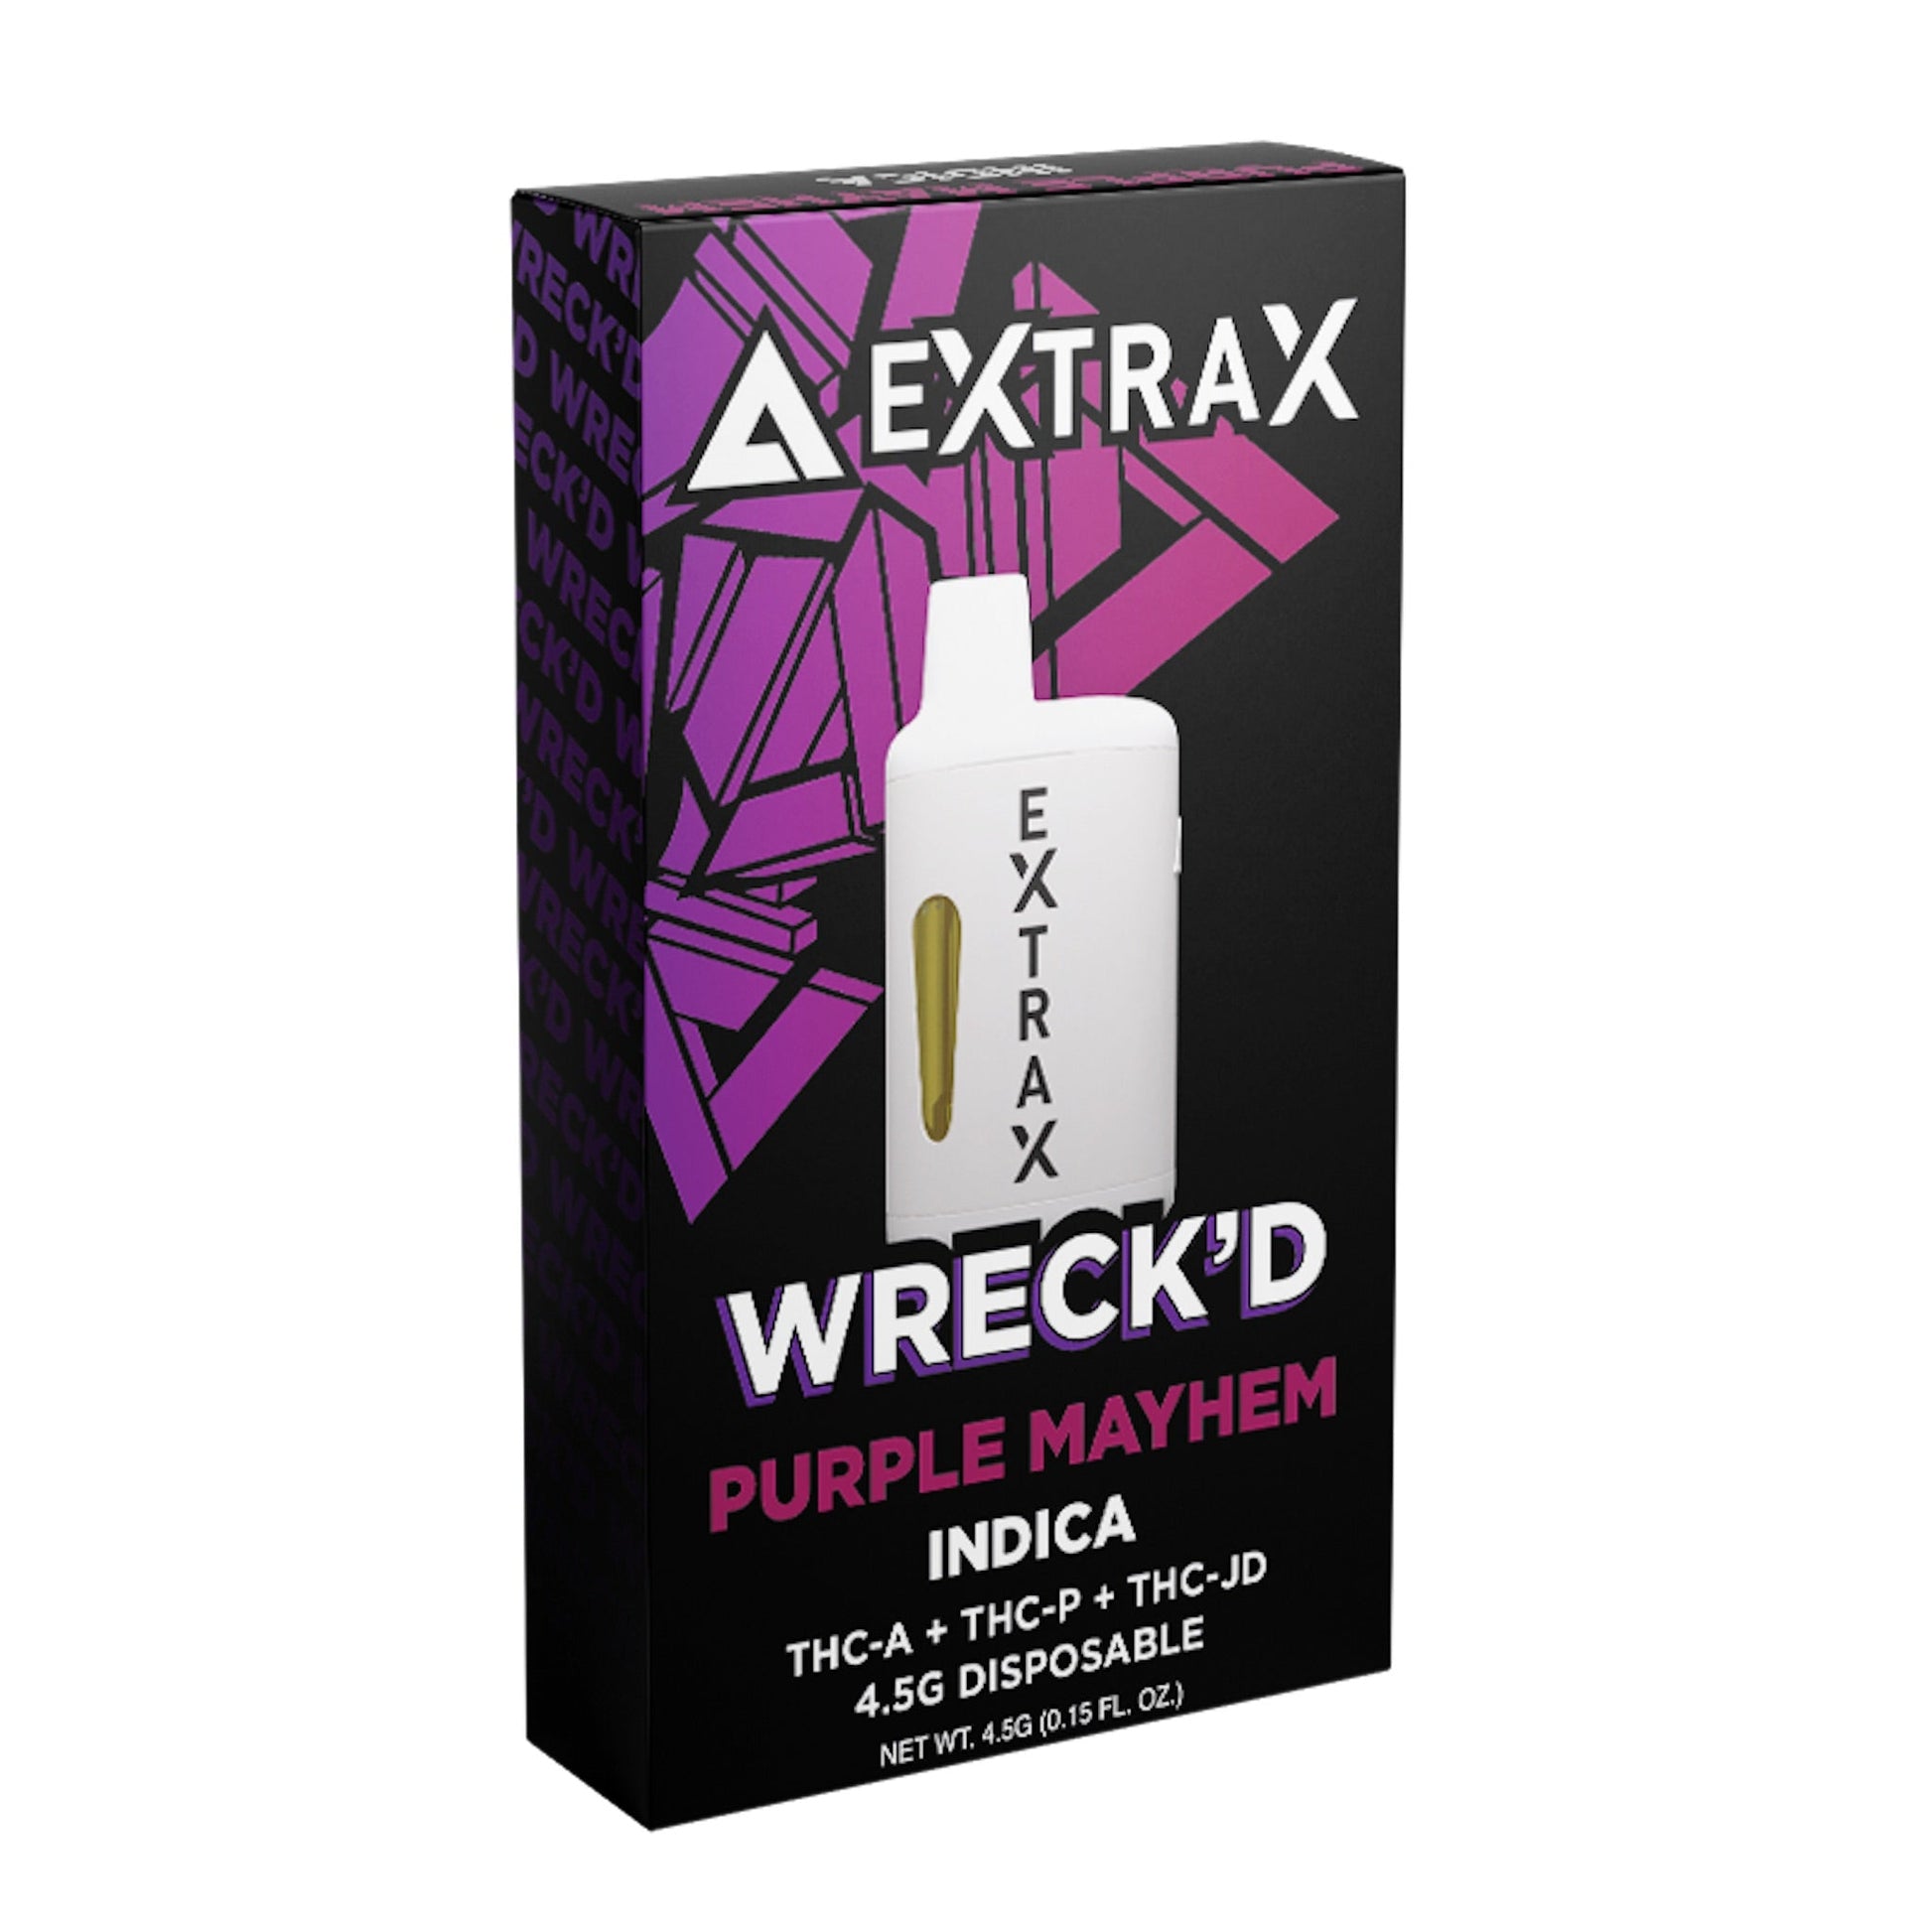 Extrax Wreckd THC-A + THC-P Vaporizer - 4500mg Purple Mayhem